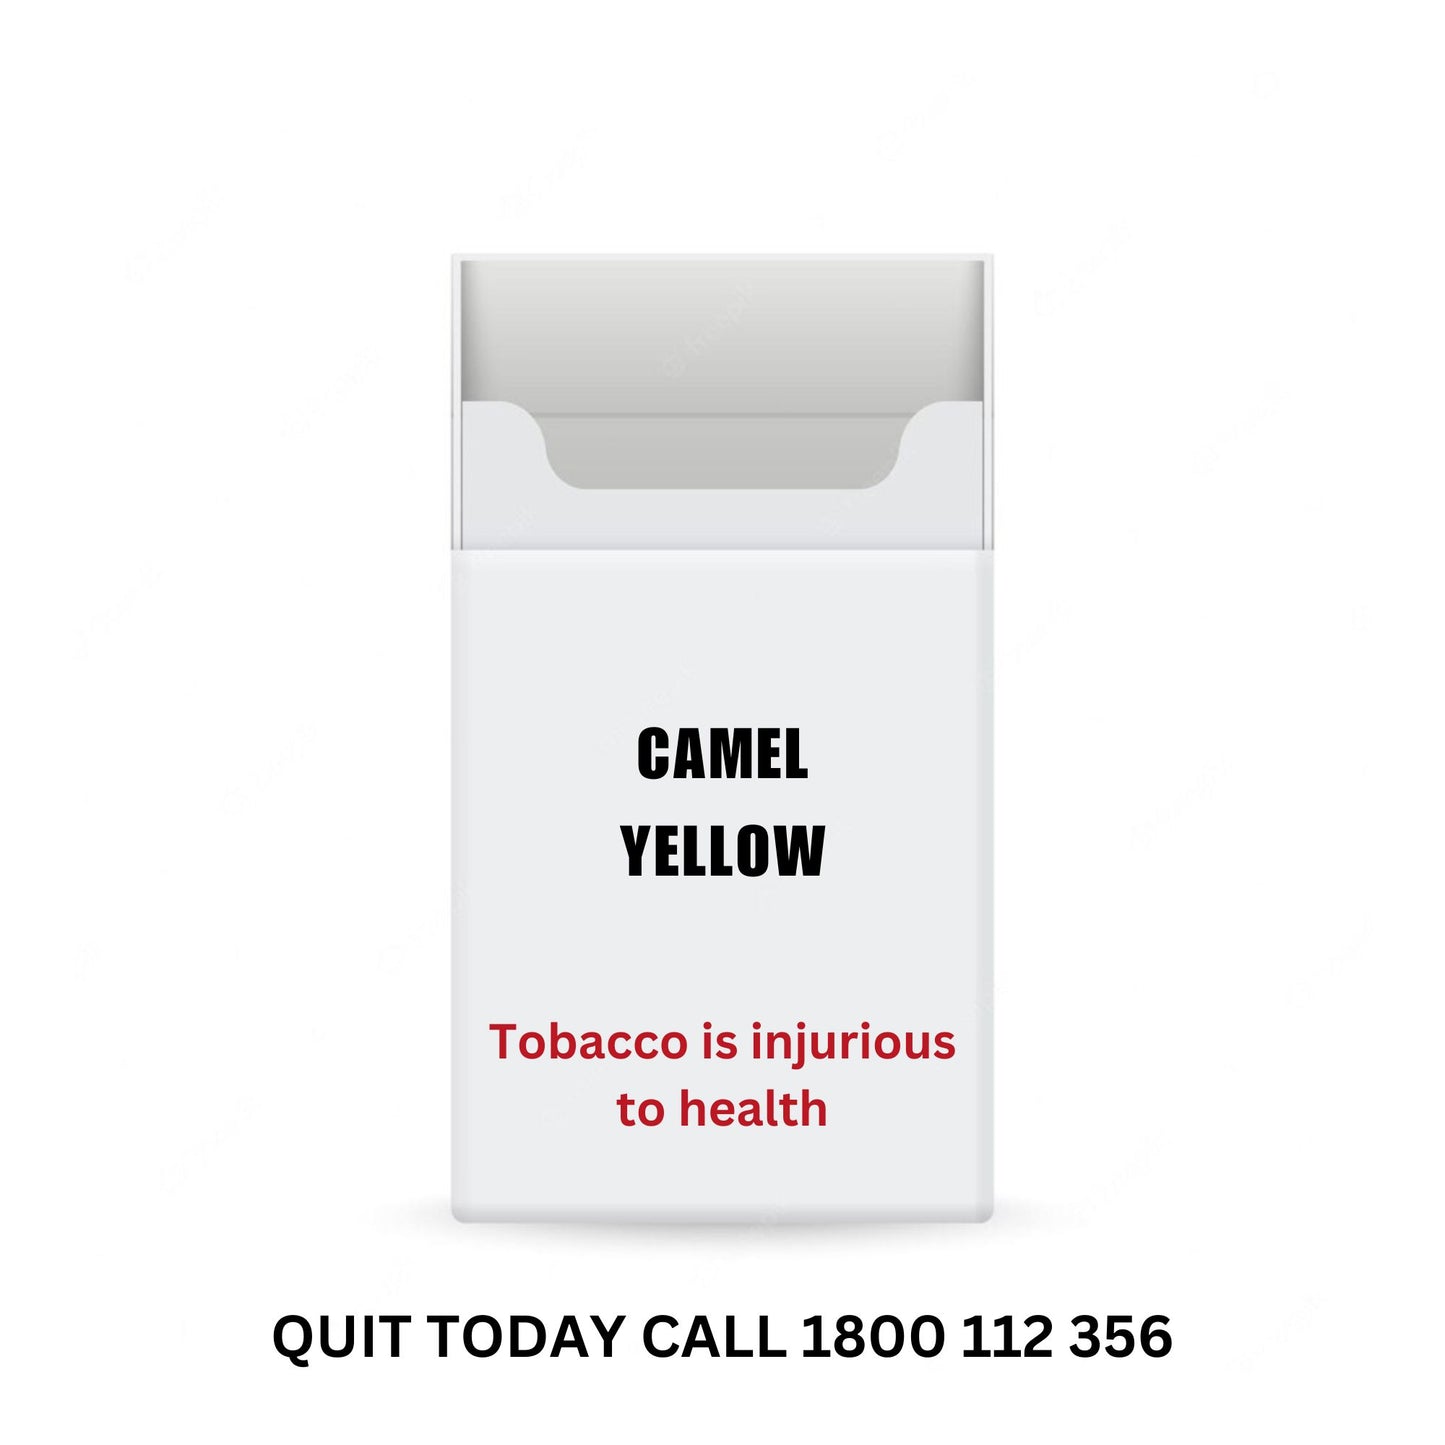 Camel Yellow Cigarette